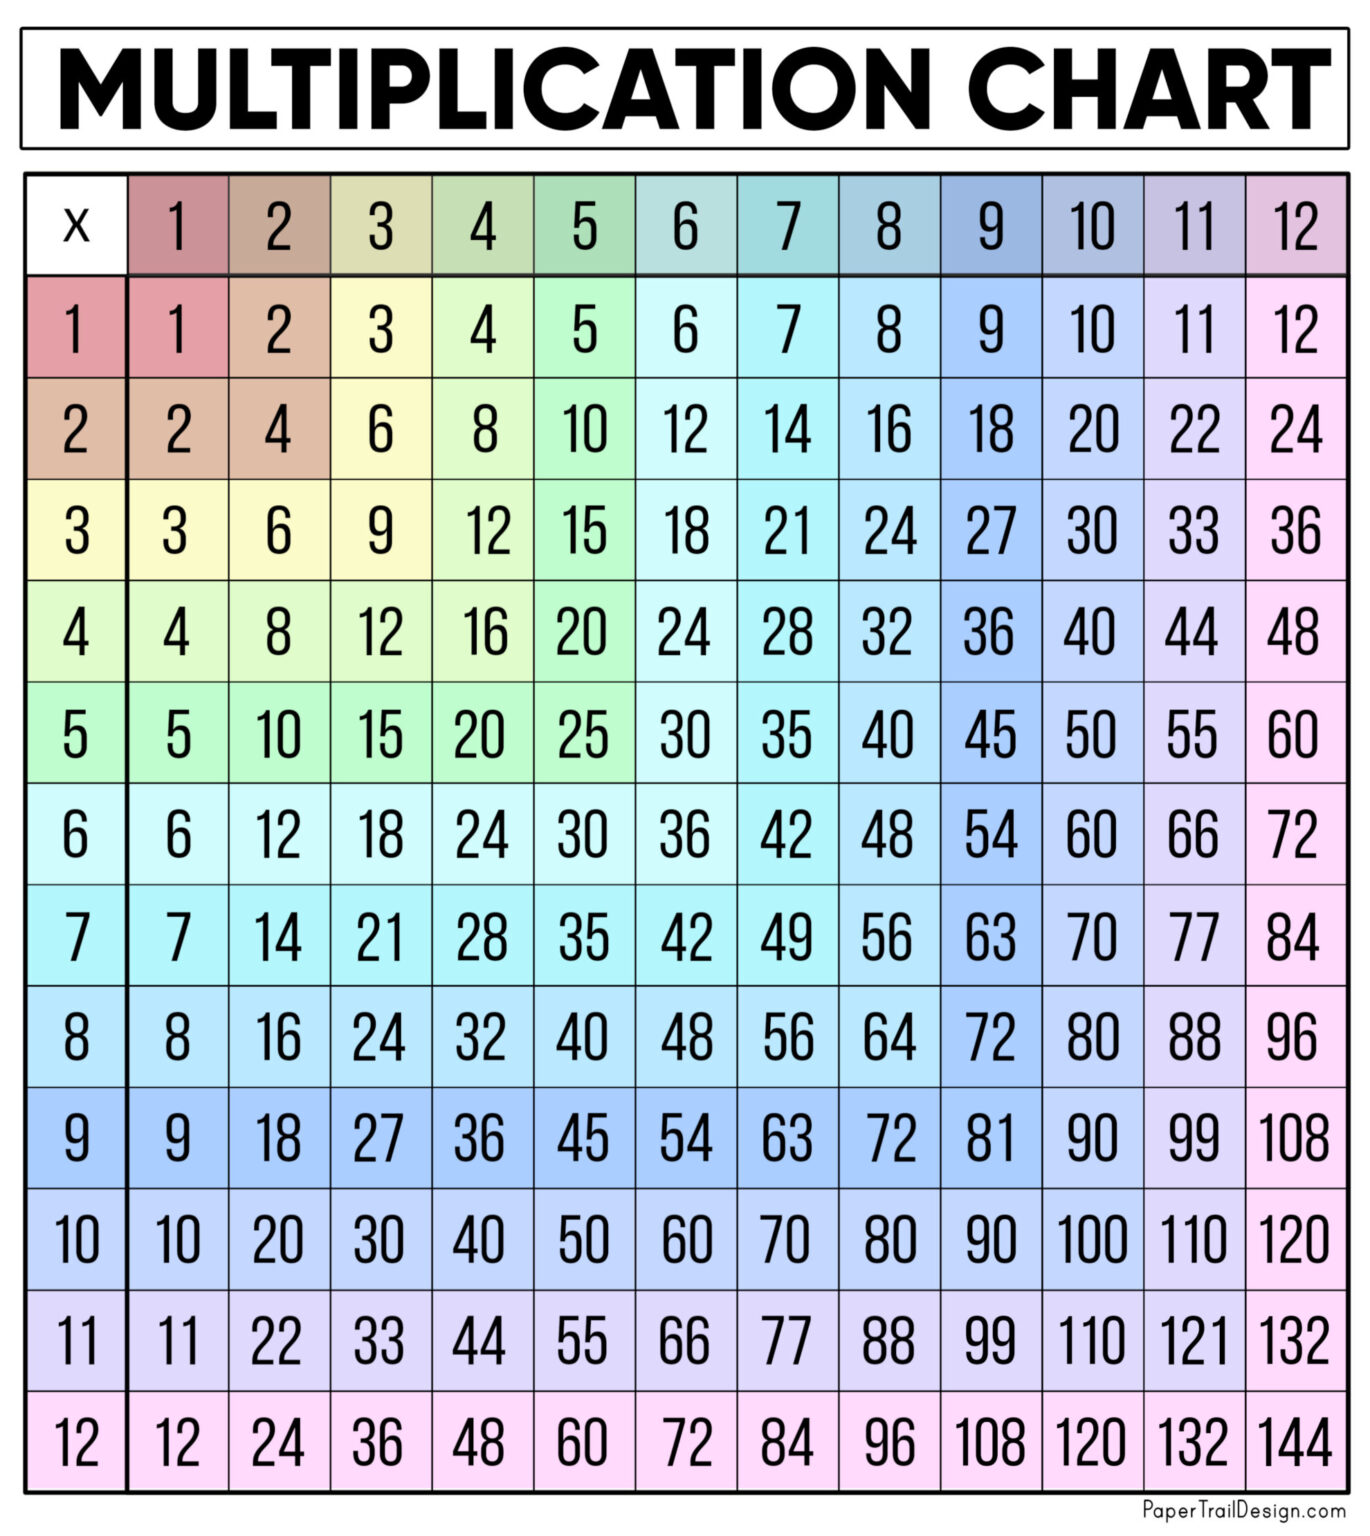 multiplication-table-chart-printable-vinajes